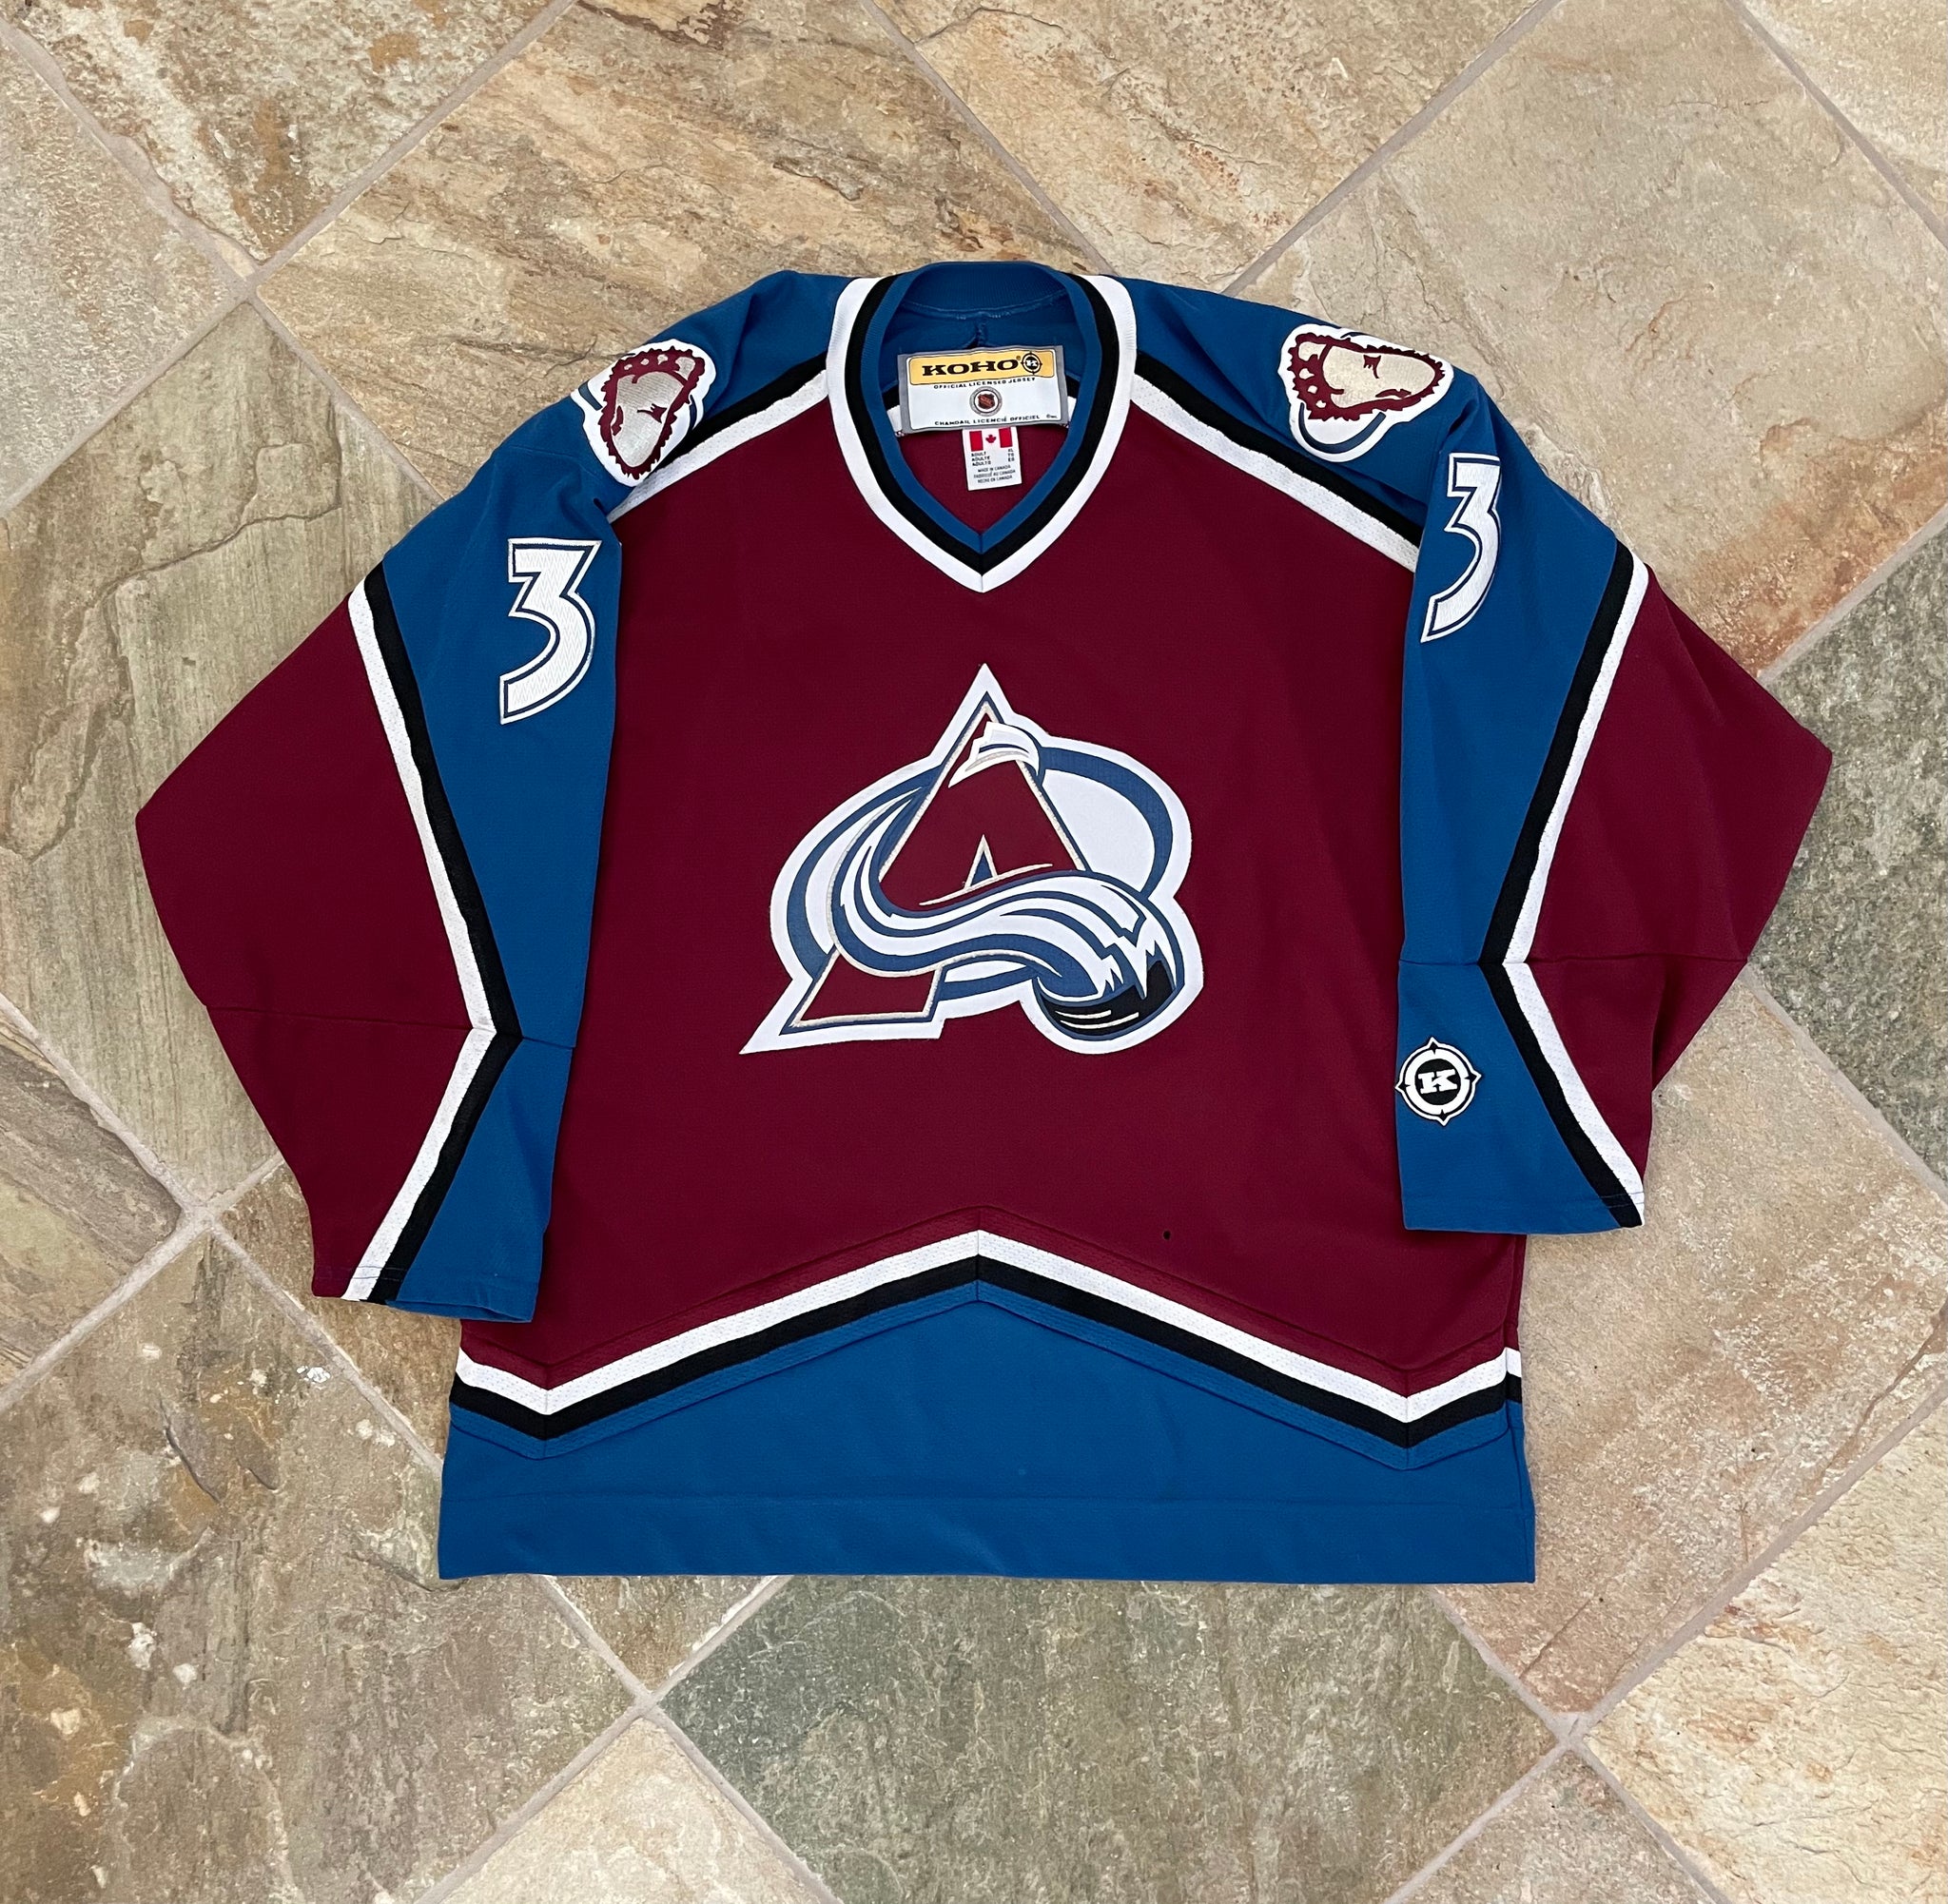 Youth L/XL - Vintage Colorado Avalanche NHL Hockey Jersey